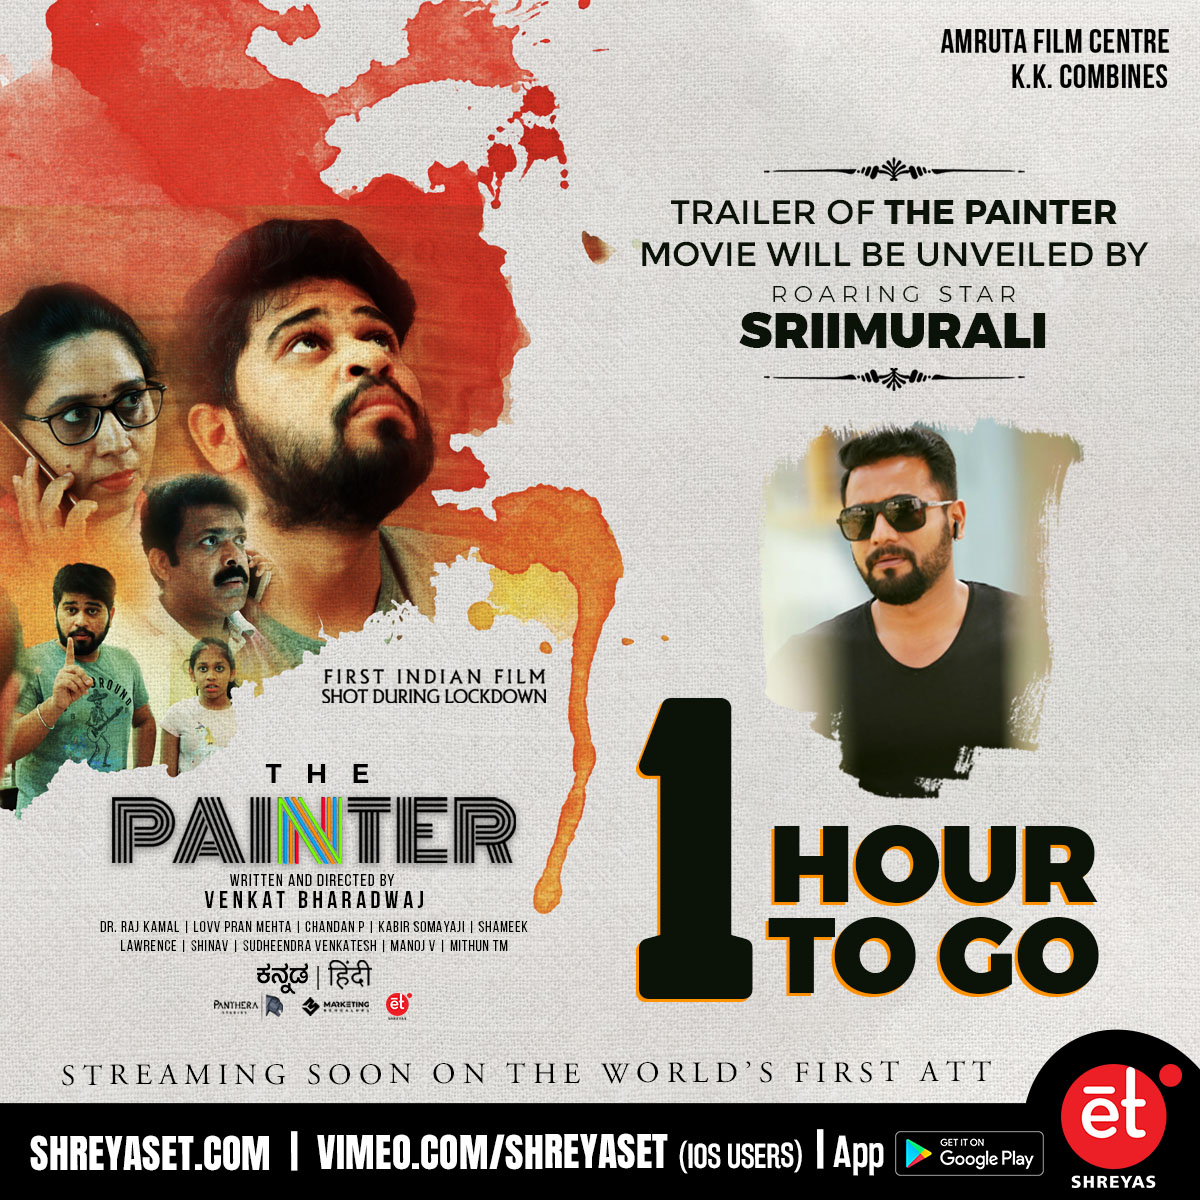 One hour to go for the Trailer of #ThePainter, #RoaringStar @SriiMurali is going to launch the trailer.

Stay tuned..!

#NewAgeThriller #Tollywood #VenkatBharadwaj #SriiMurali @LahariMusic #ShreyasET